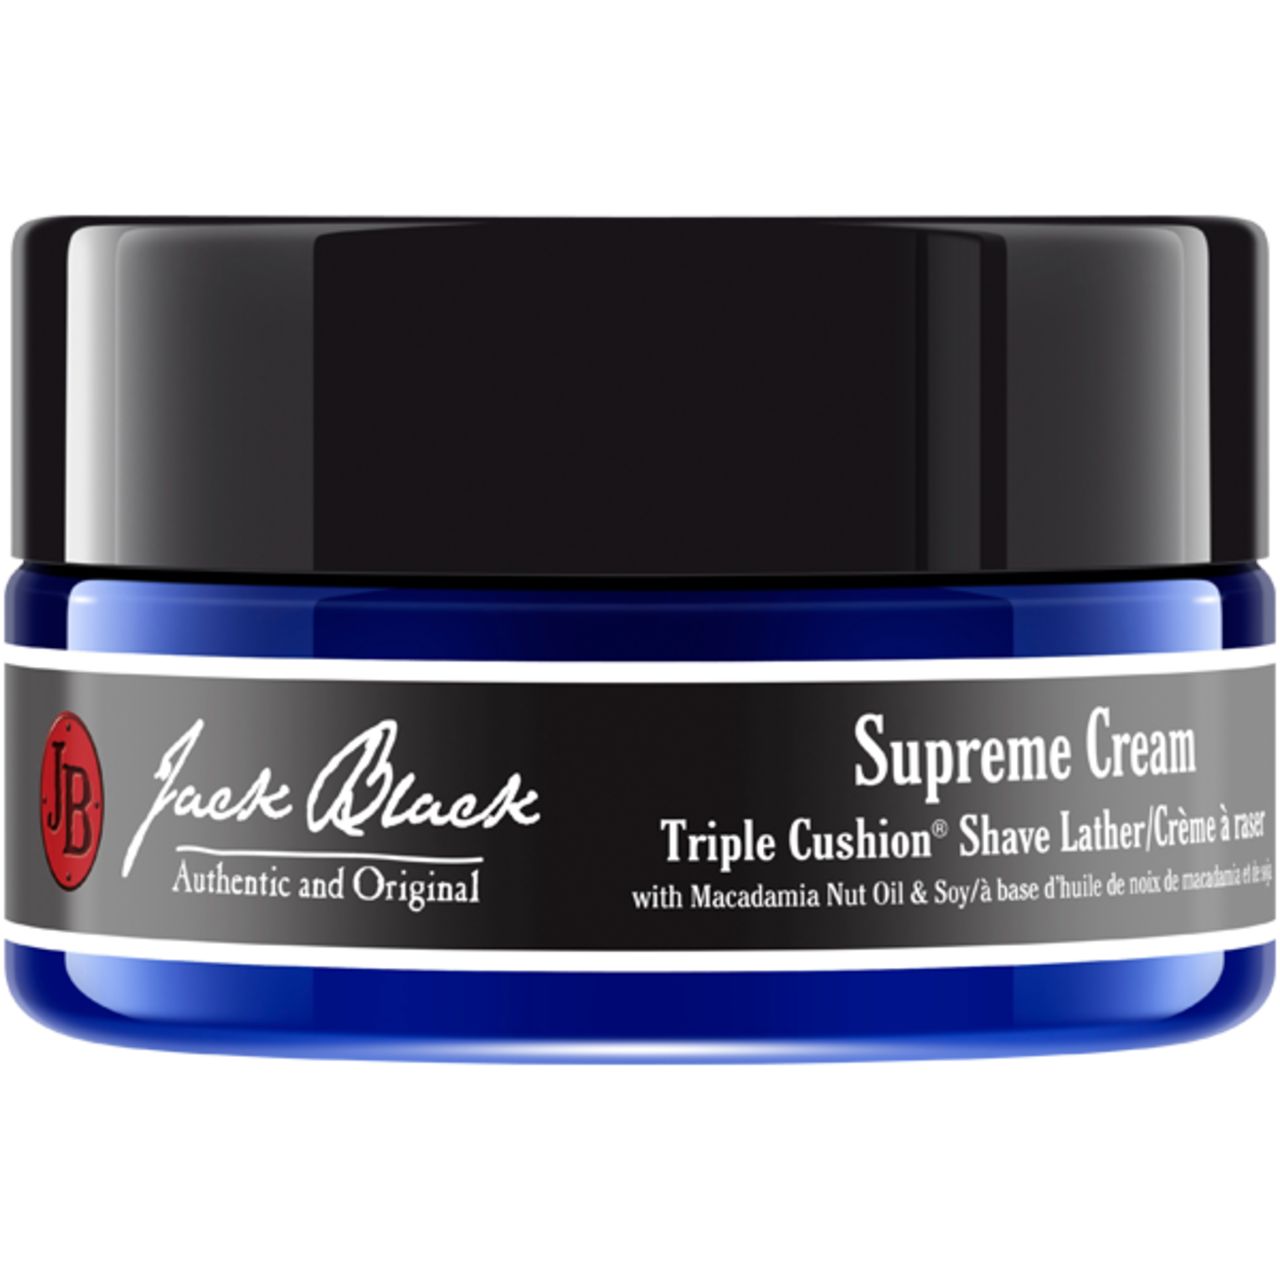 Jack Black, Supreme Cream Triple Cushion Shave Lather